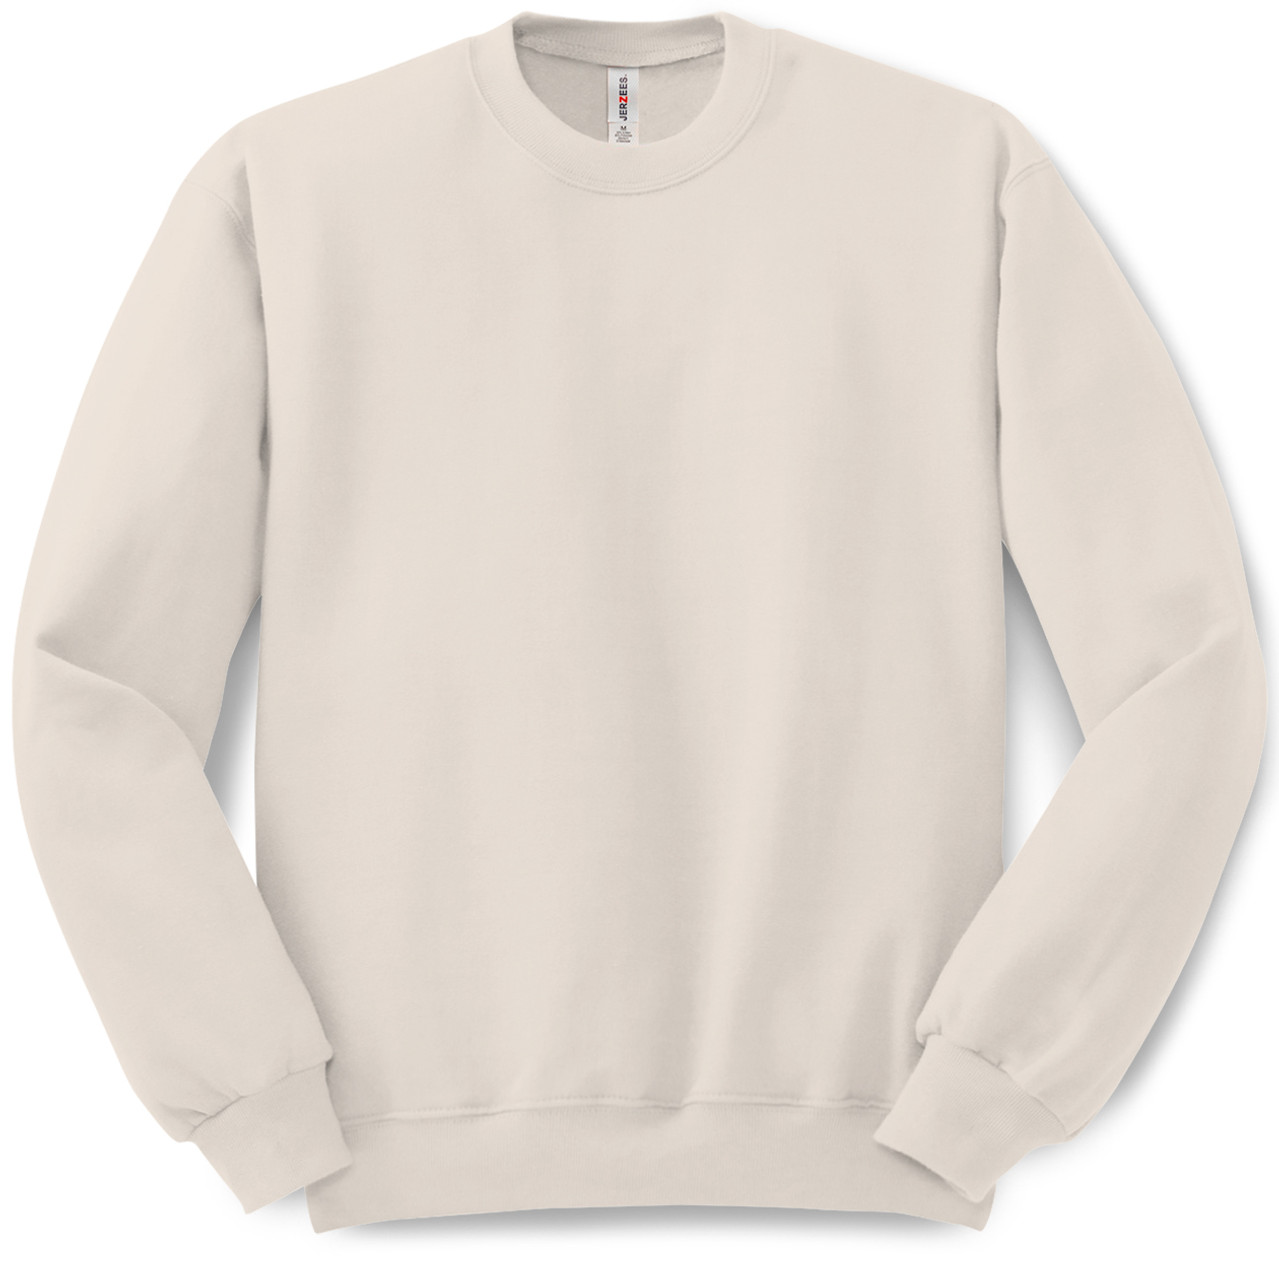 Plain Pullover Crew Neck Sweatshirt (Sweet Cream) - Sweet Cream - XL